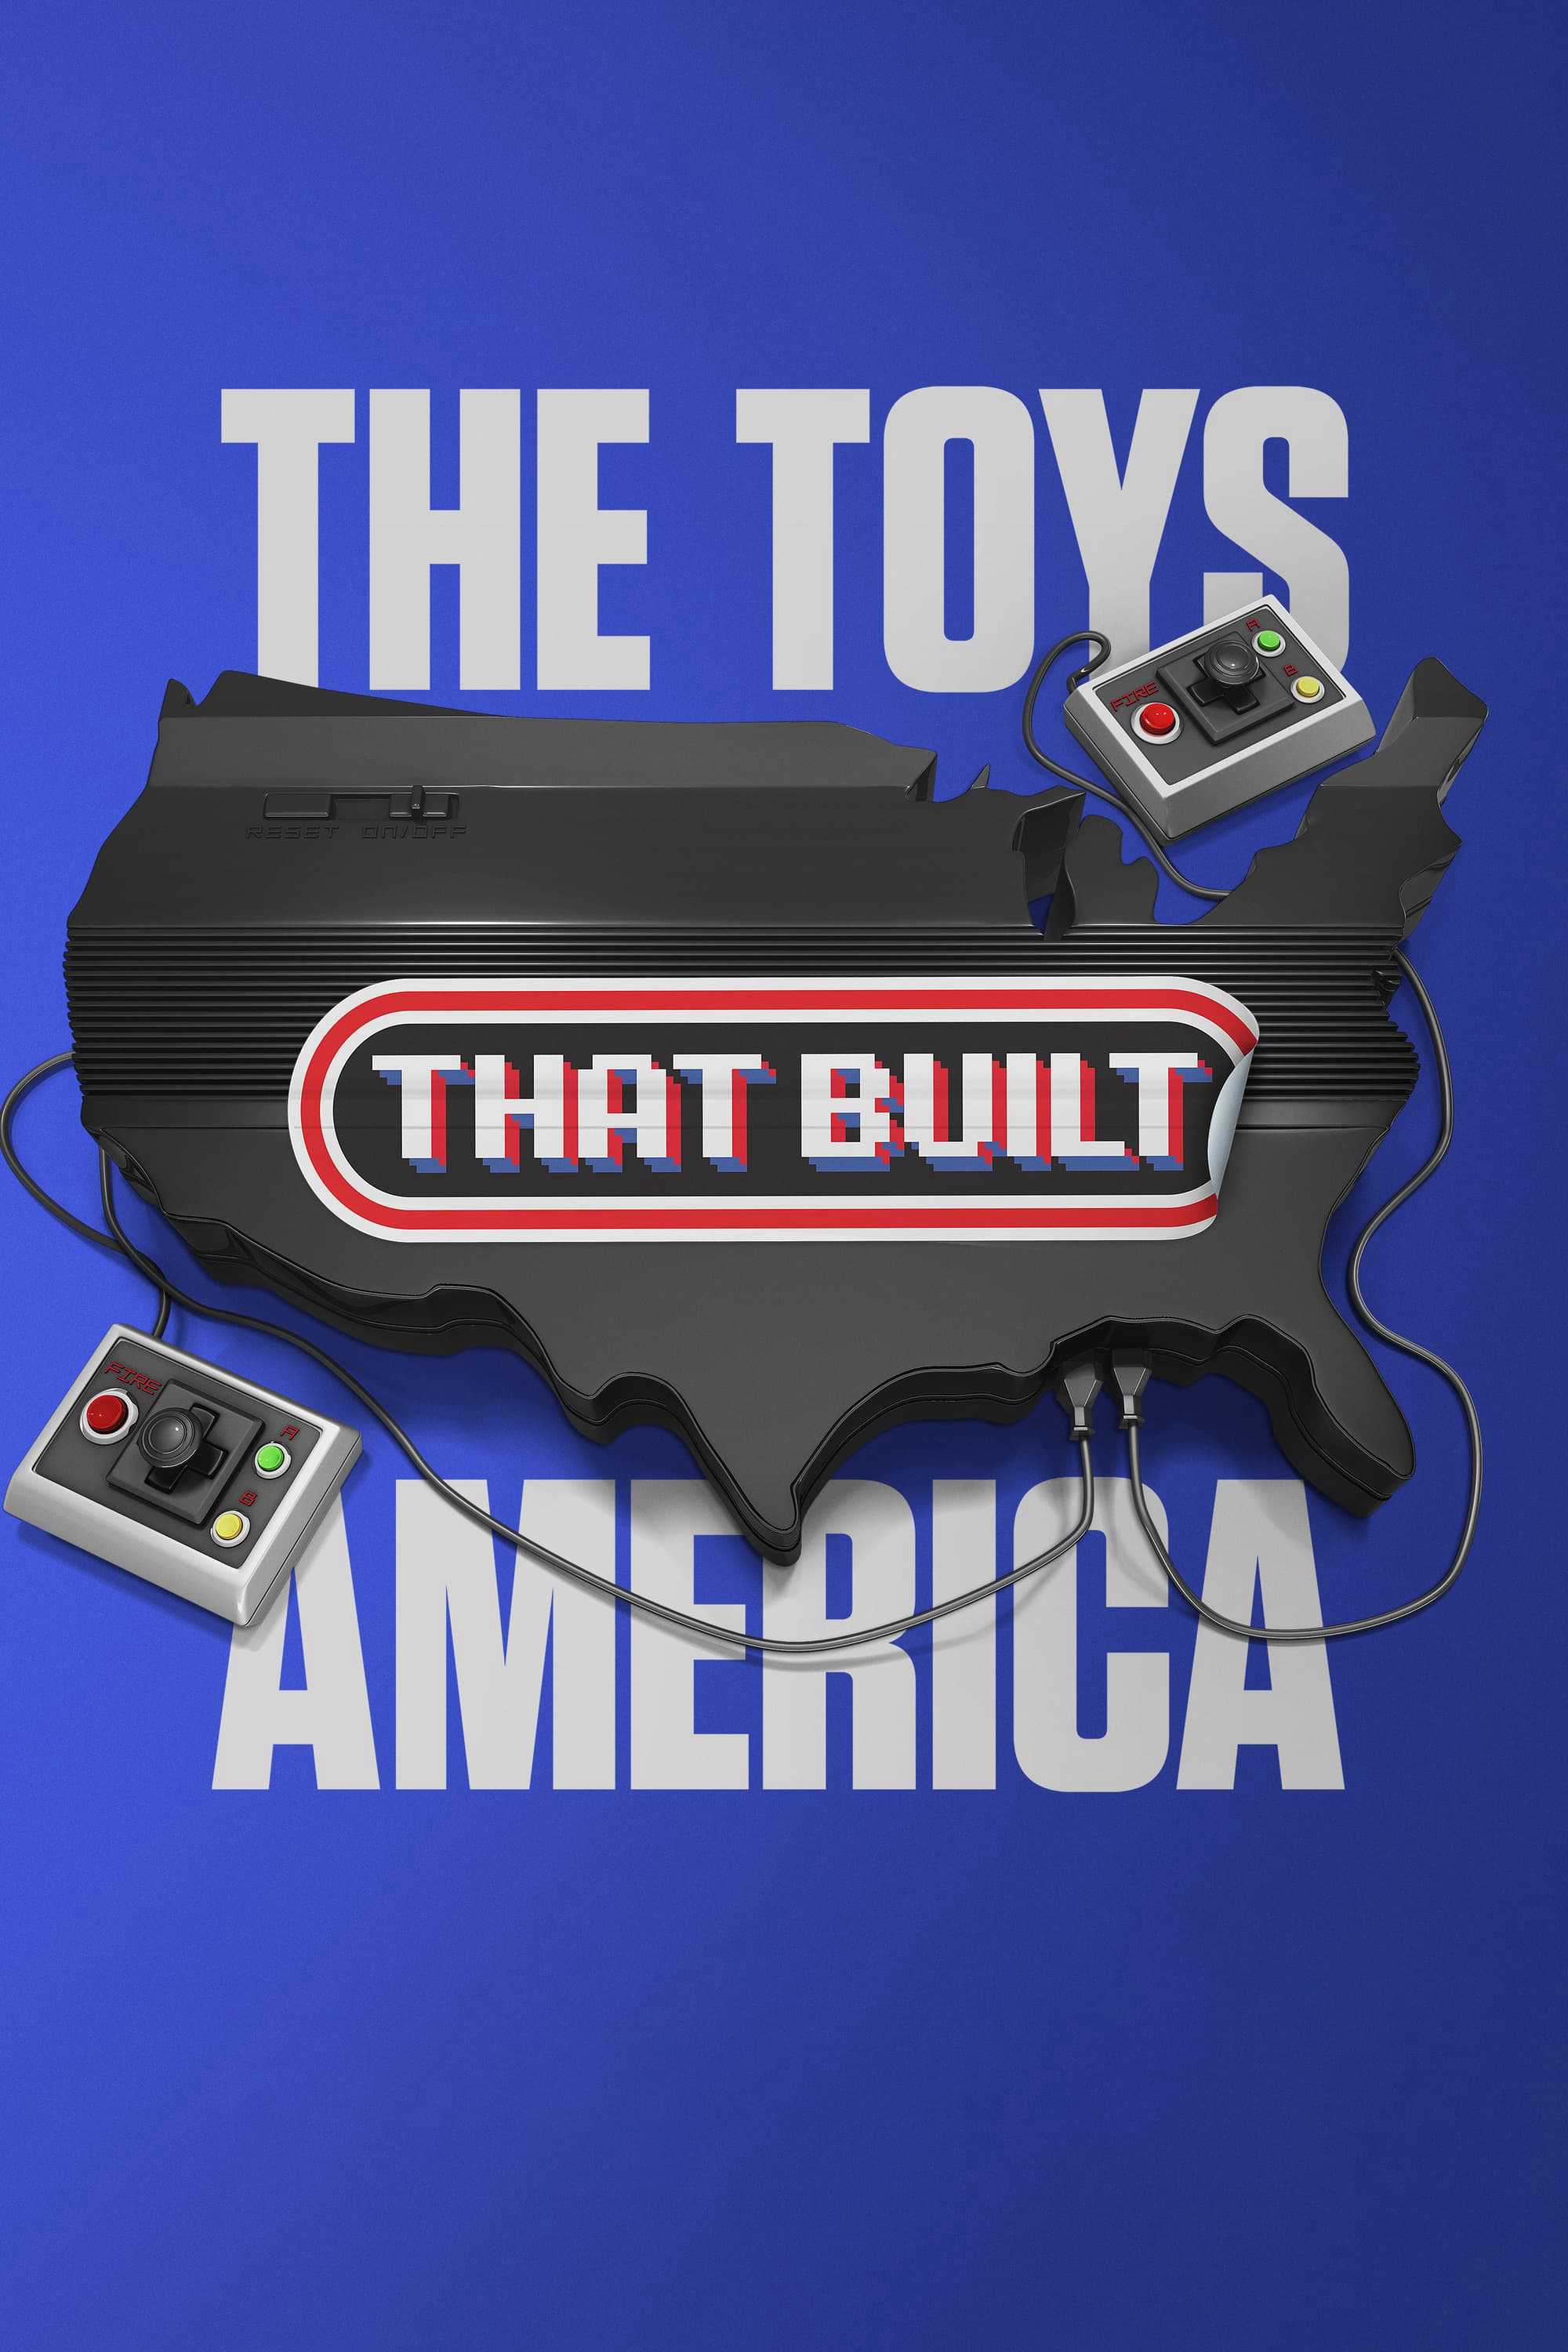 The toys that built america (phần 2) - The toys that built america (season 2)